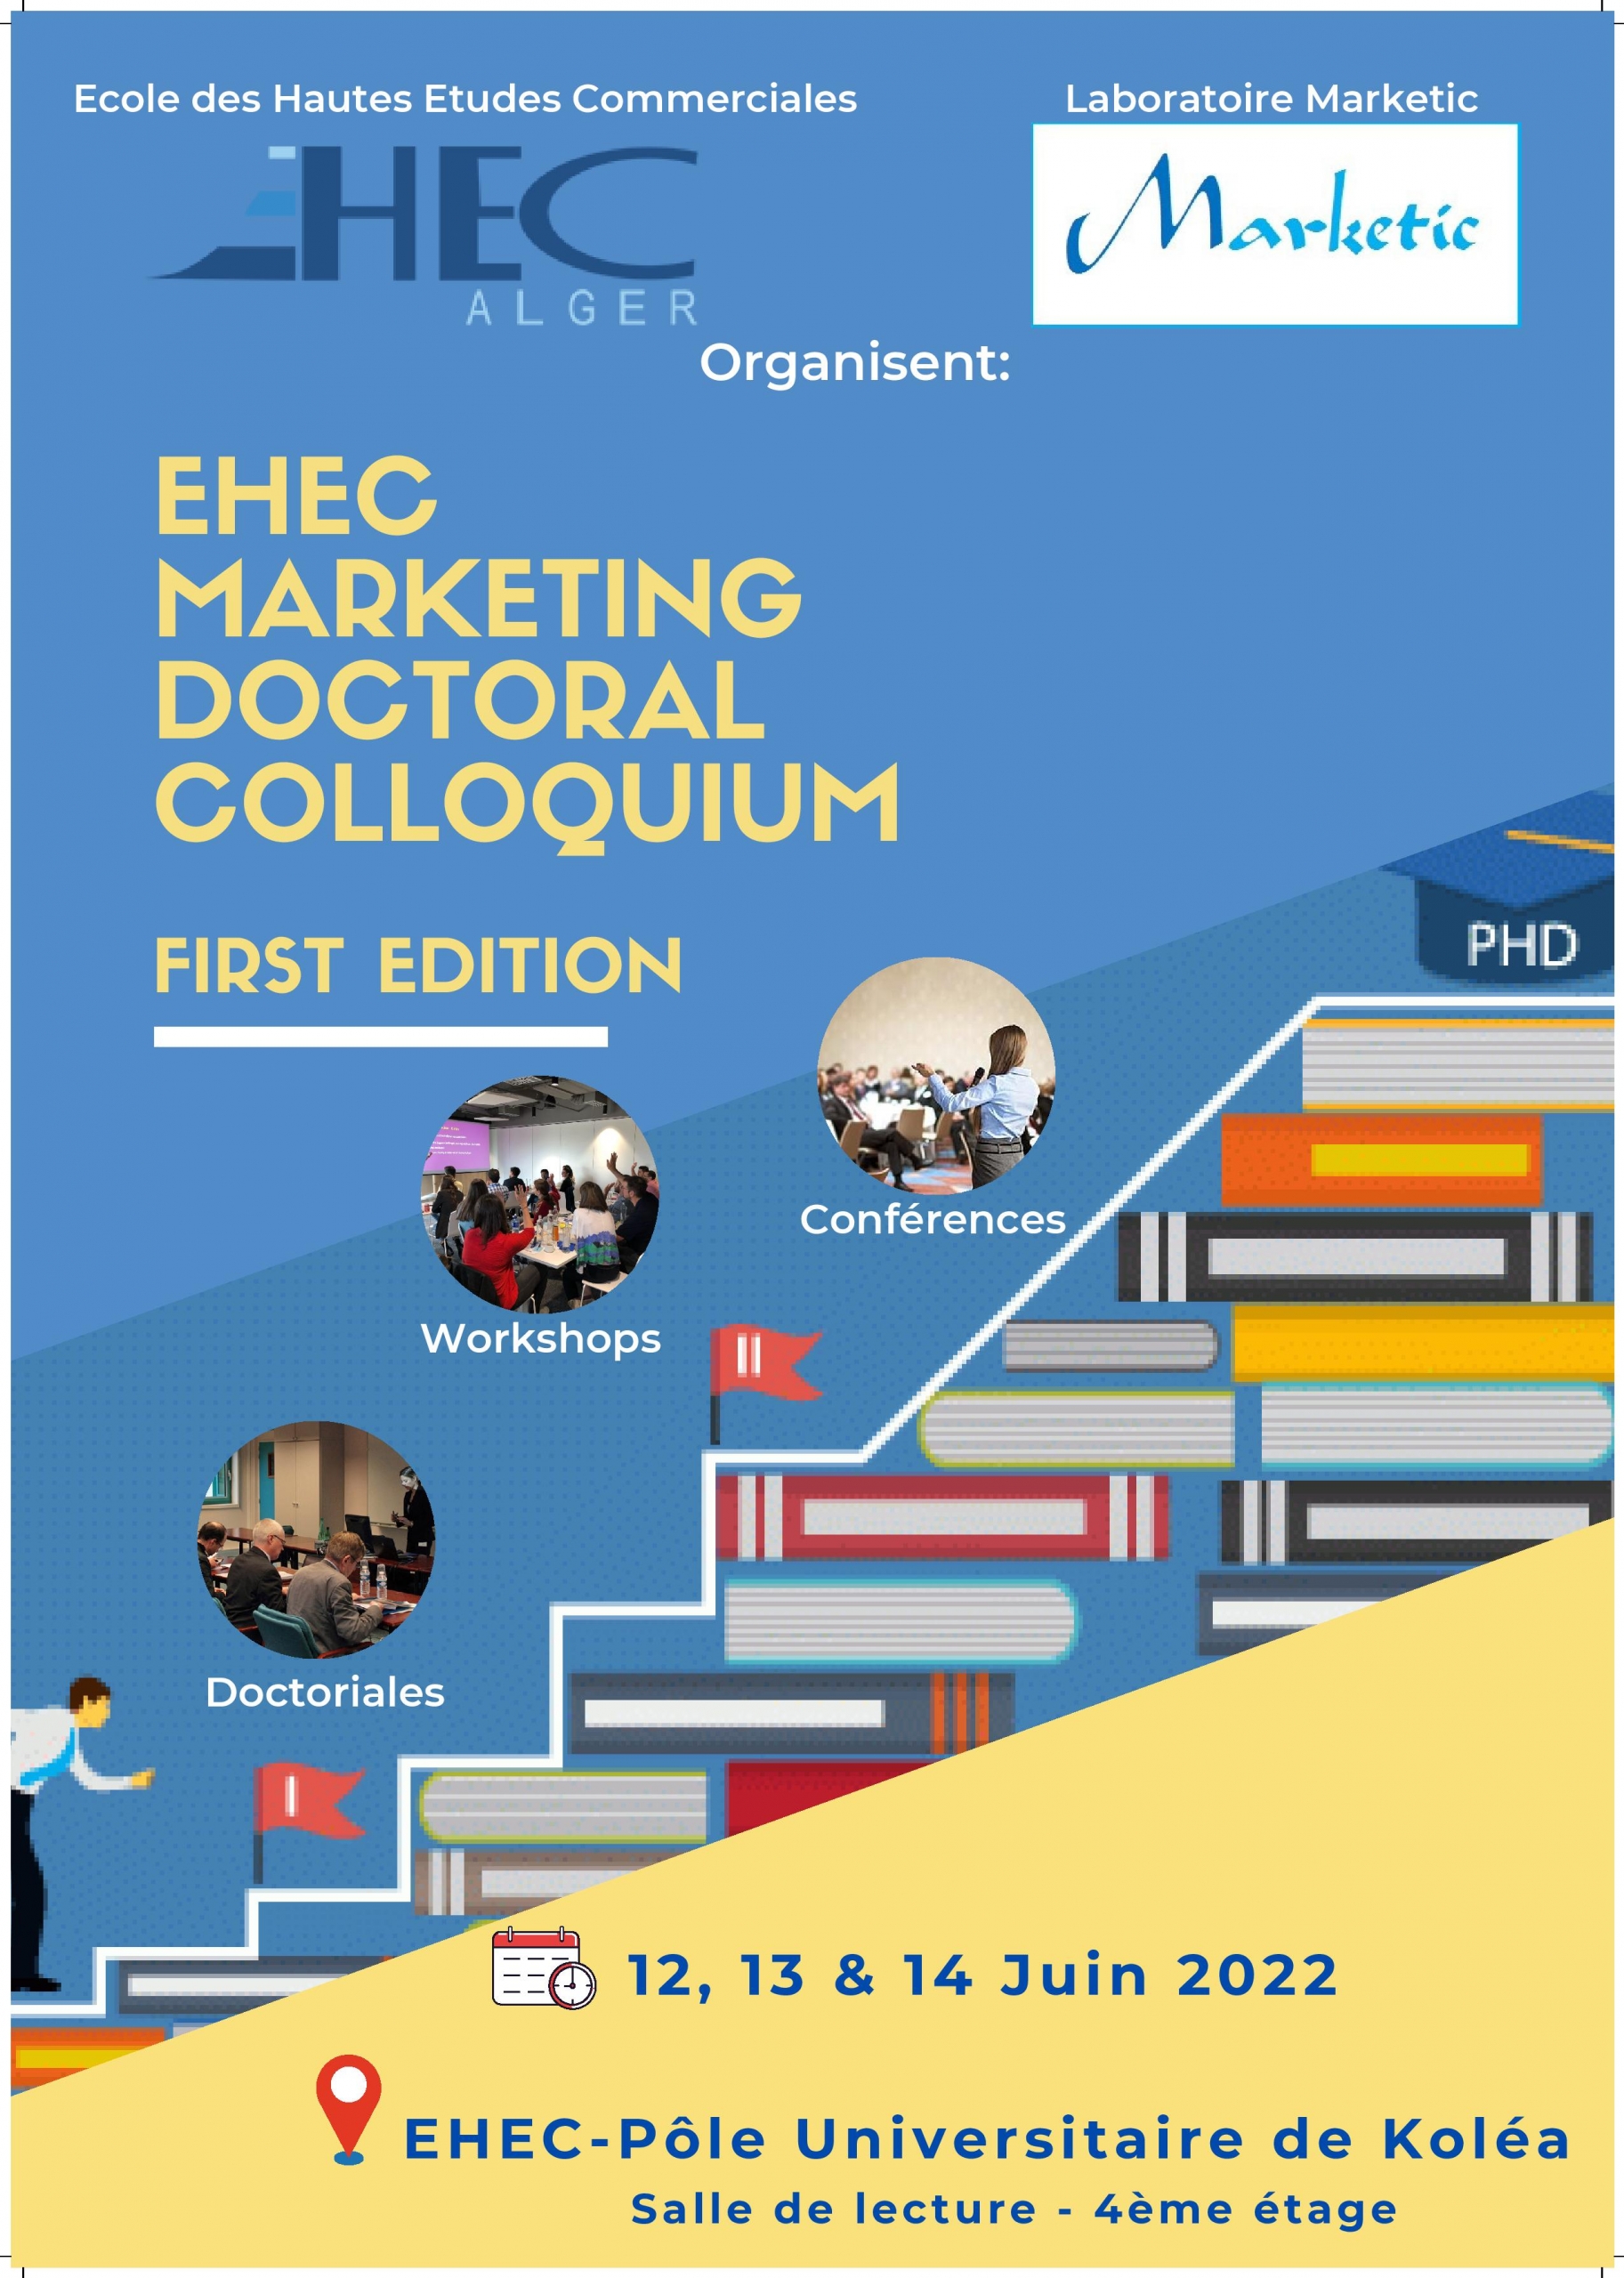 EHEC Marketing Doctoral Colloquium First Edition – Laboratoire Marketic